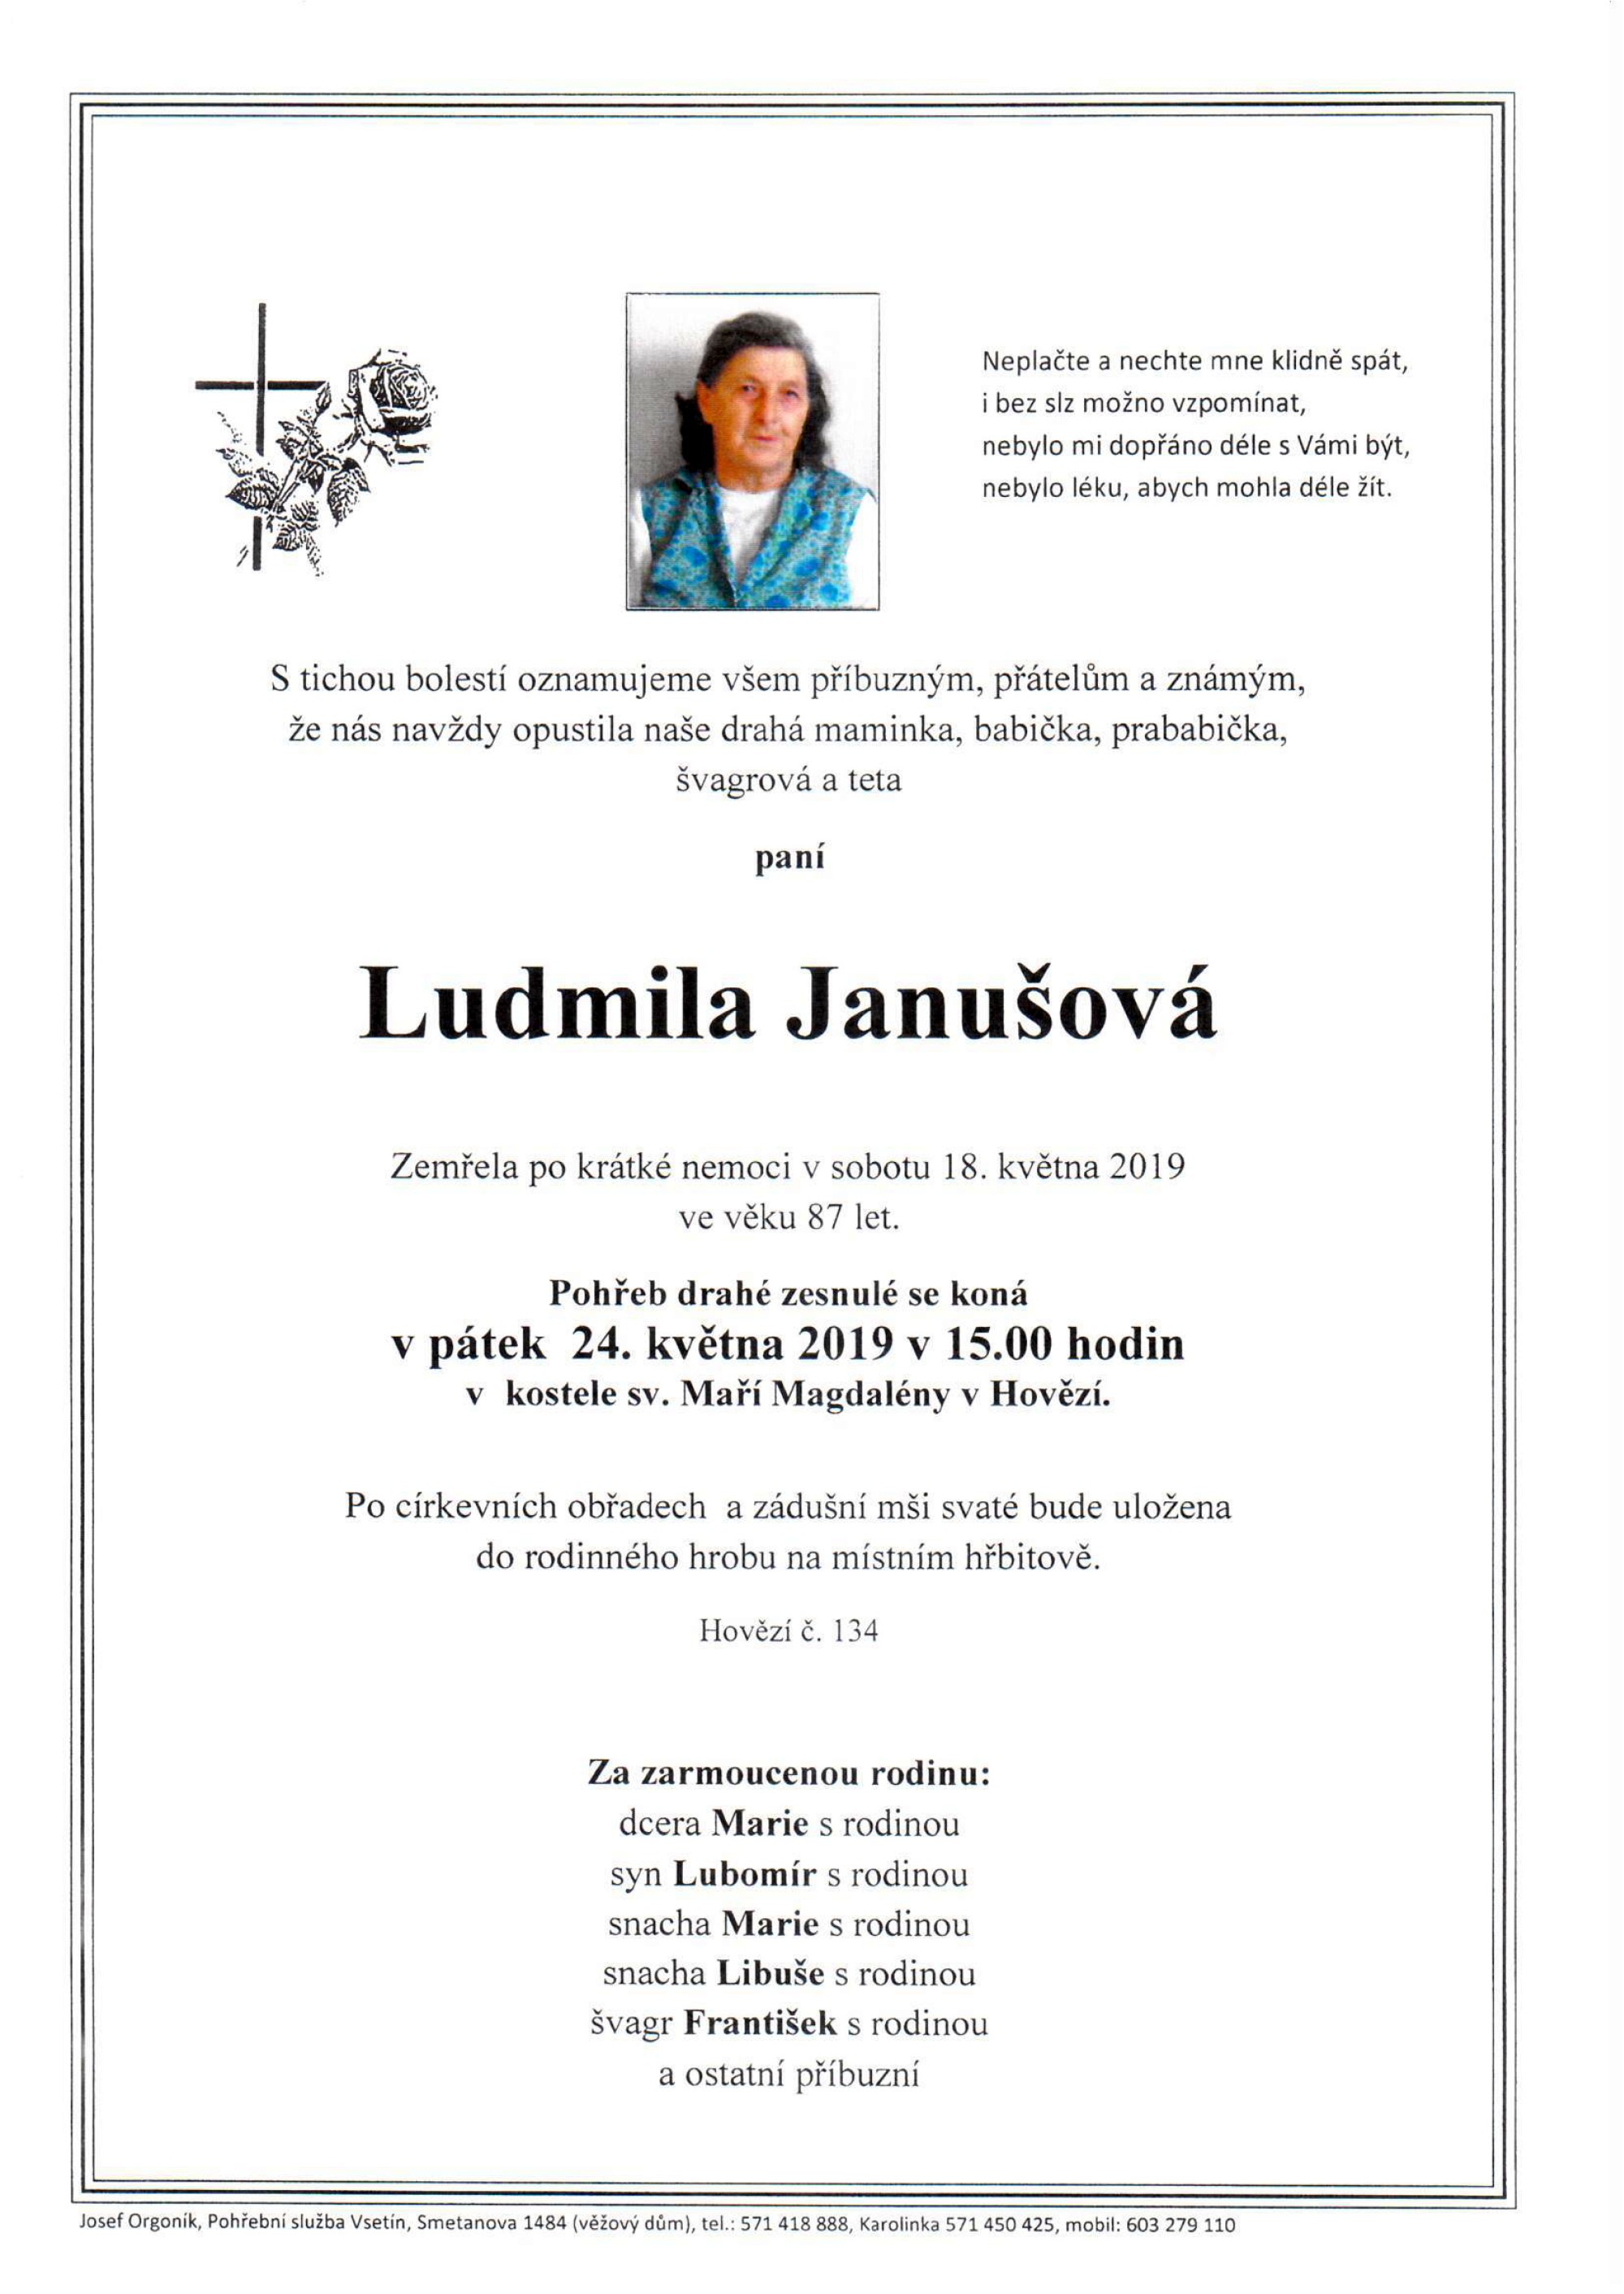 Ludmila Janušová